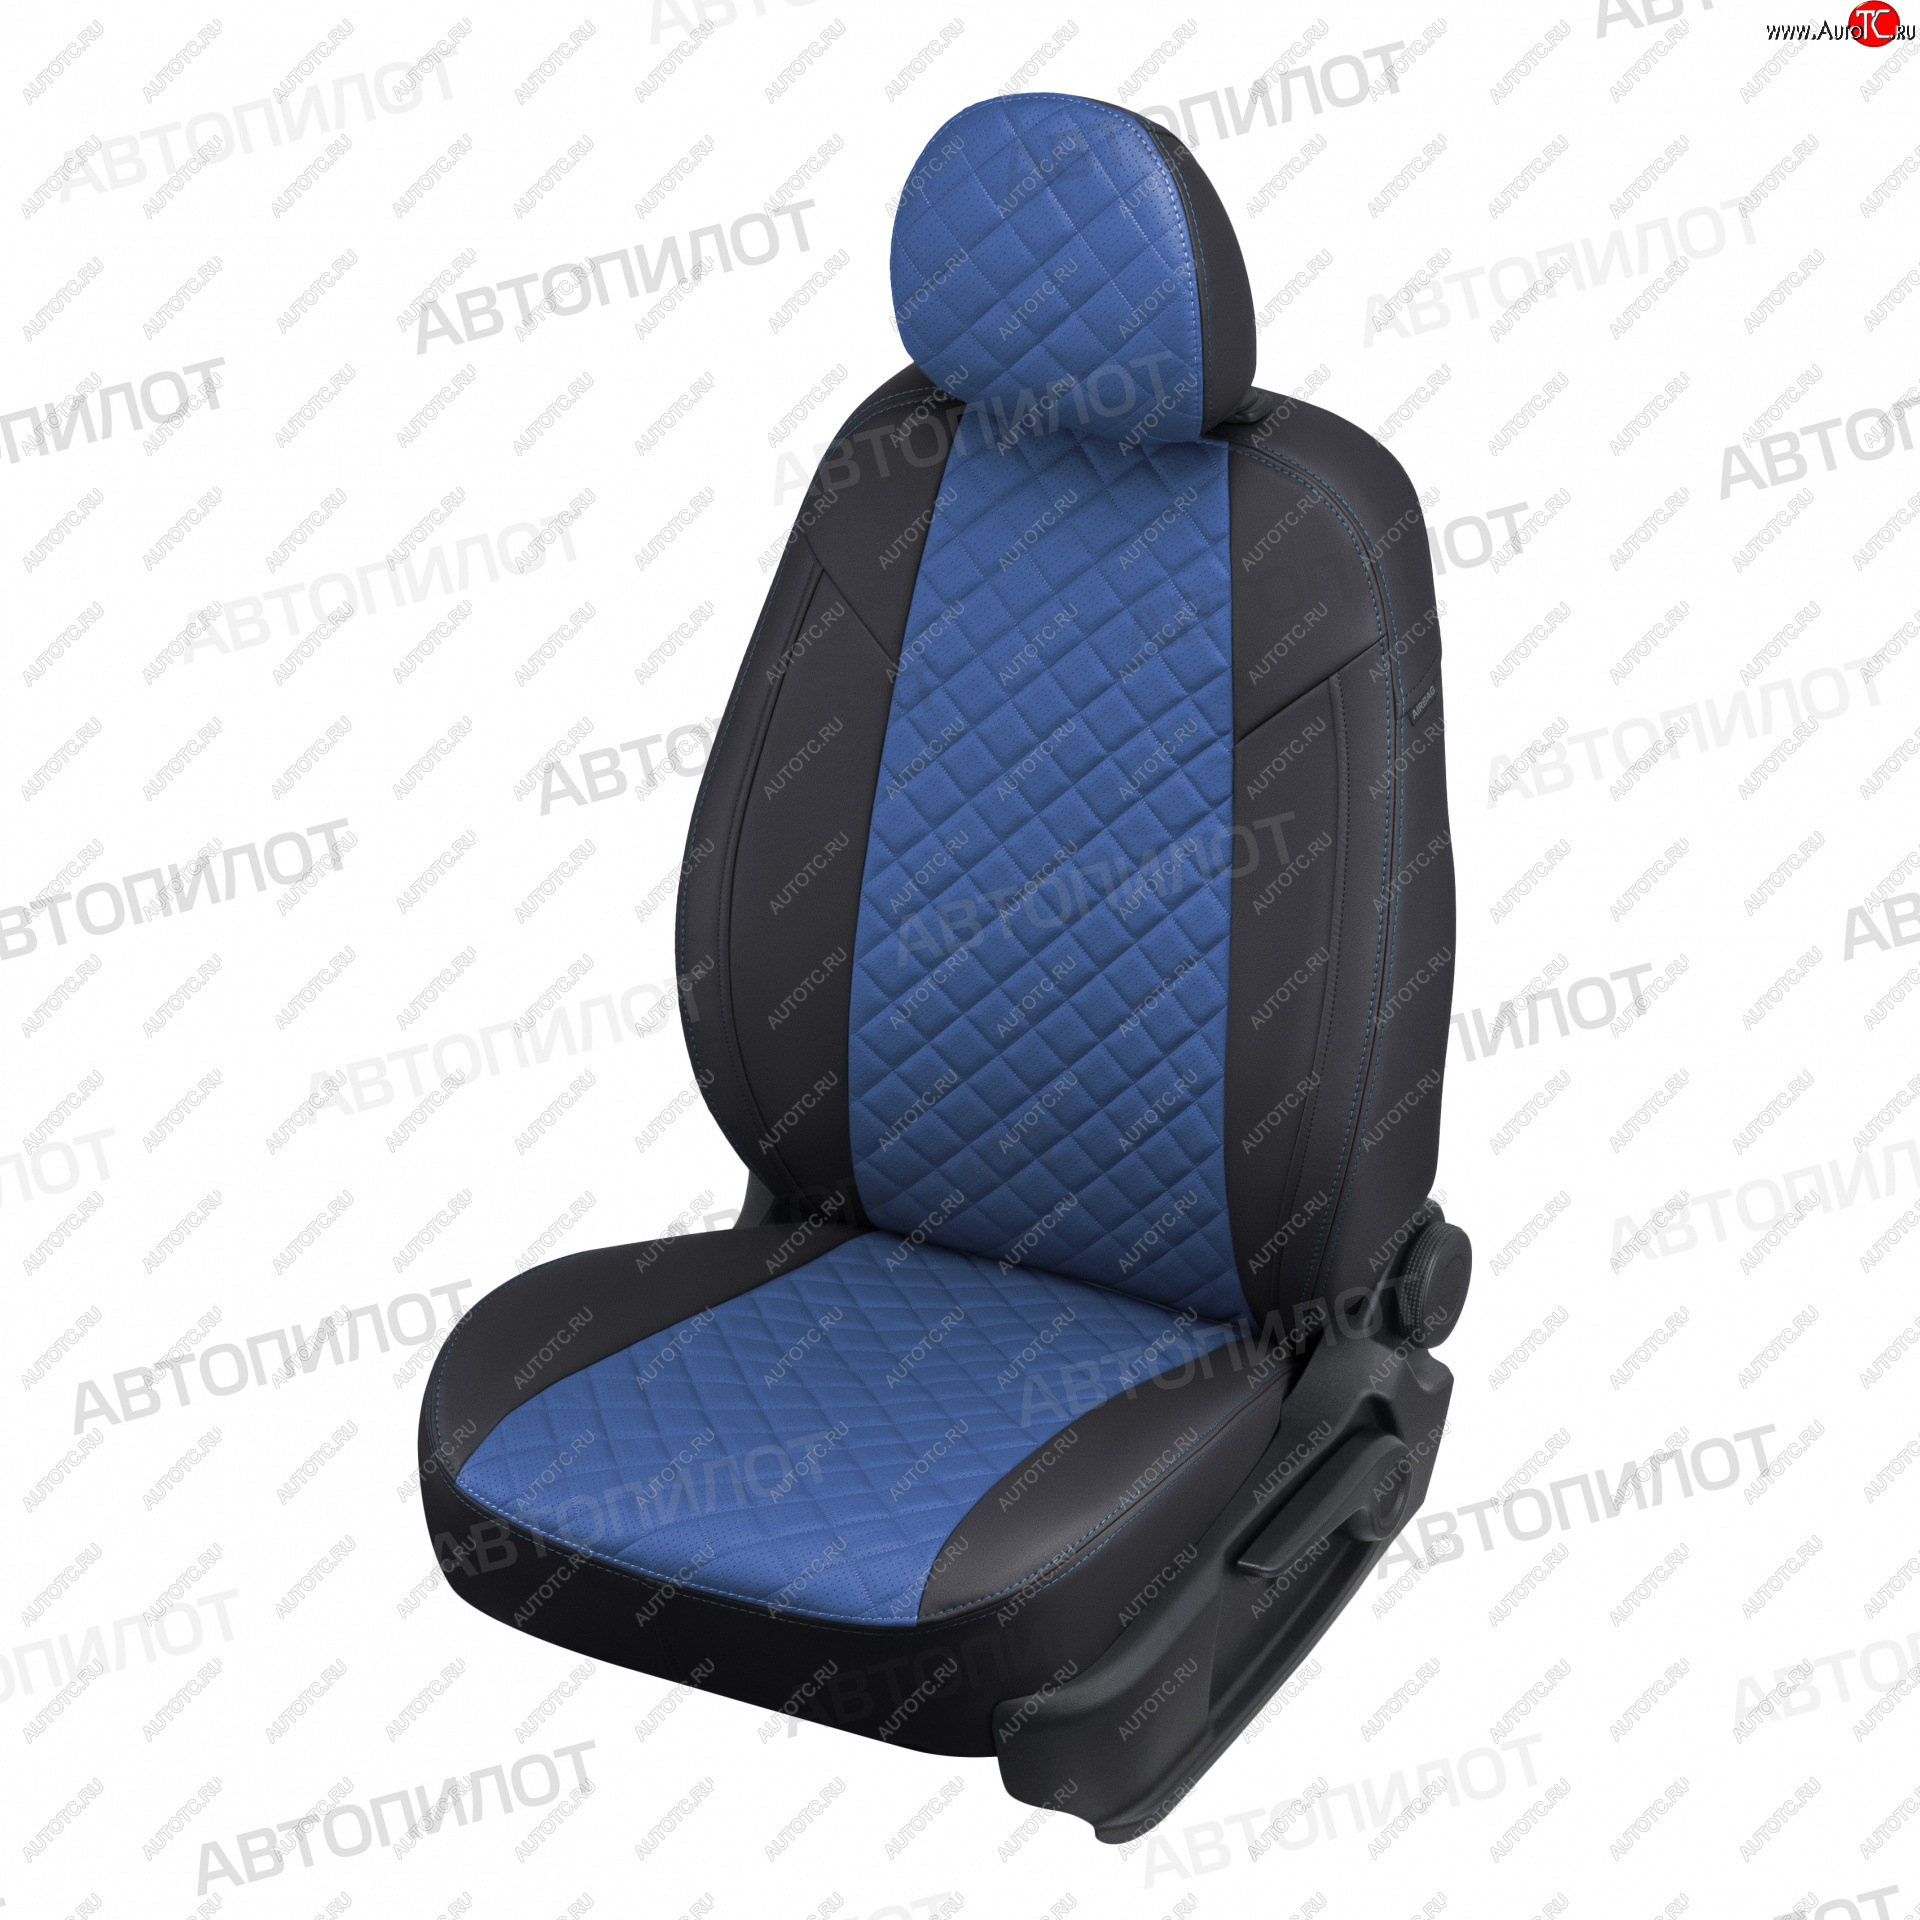 21 599 р. Чехлы сидений (экокожа, 8 мест) Автопилот Ромб  KIA Carnival  KA4 (2020-2024) (черный/синий)